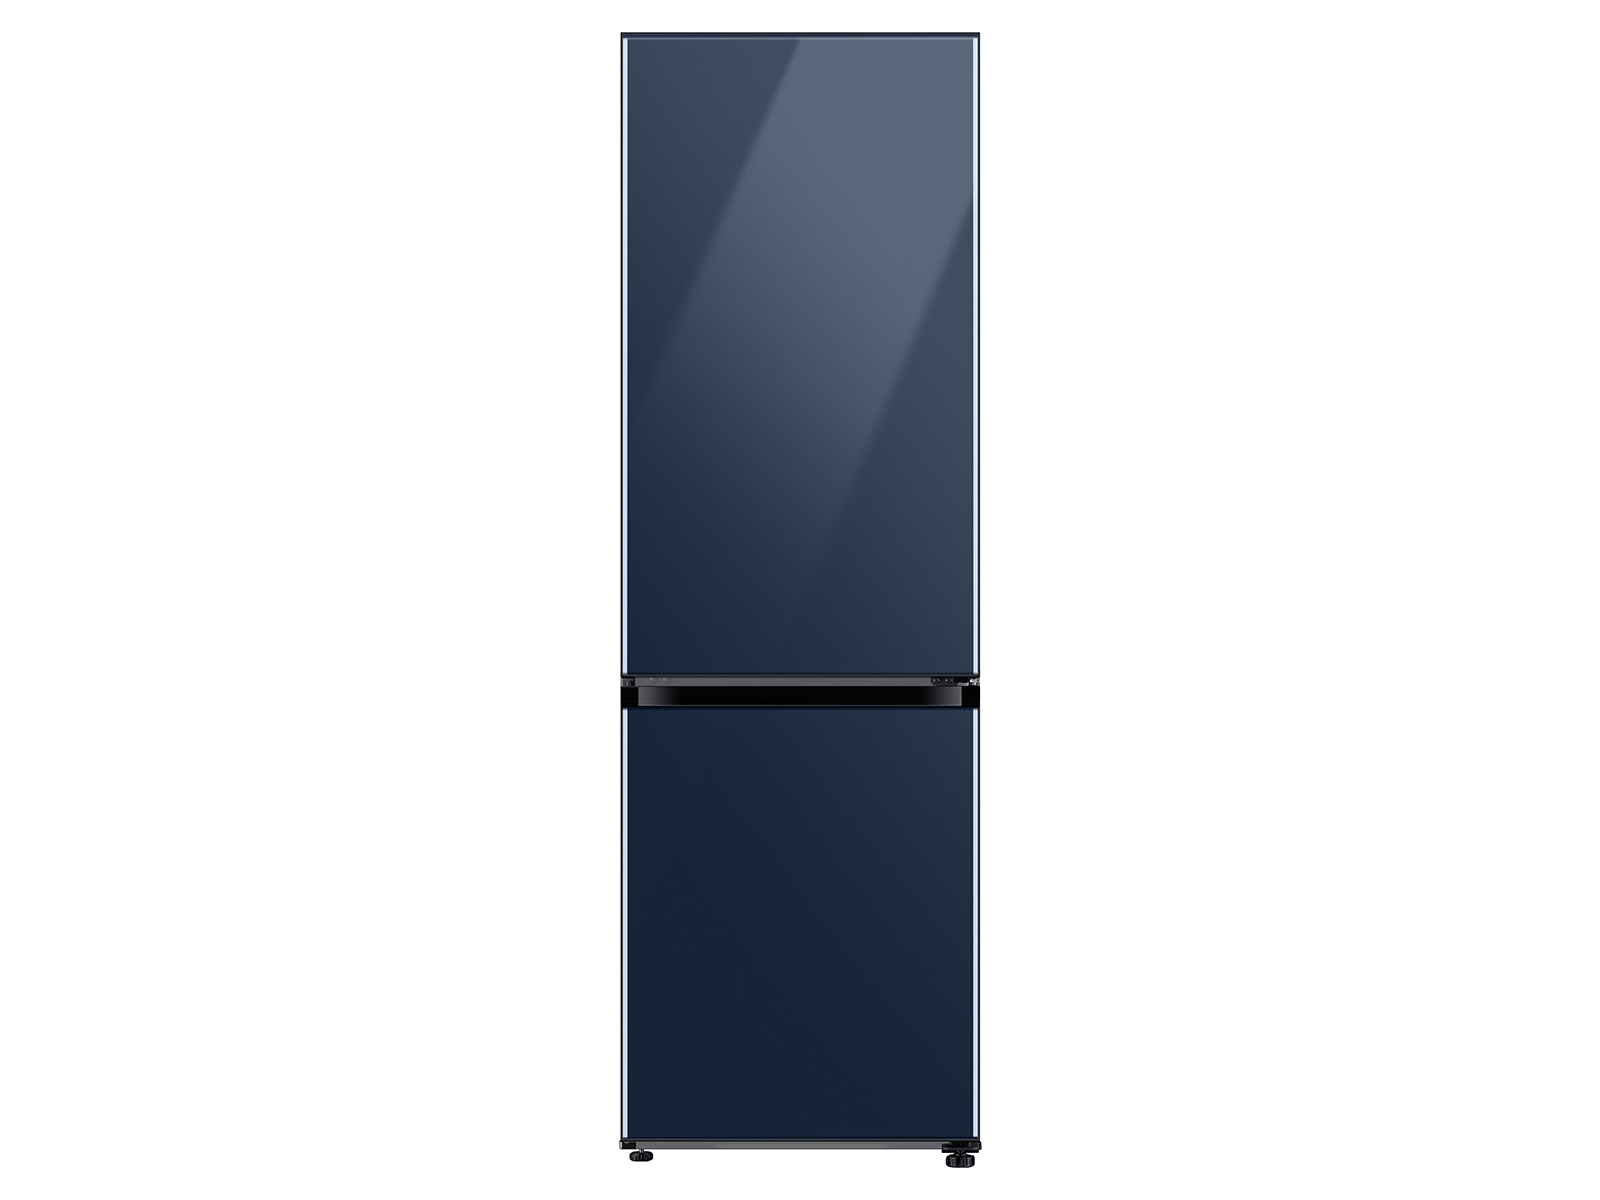 Photos - Fridge Samsung 12.0 cu. Ft. Bespoke Bottom Freezer Refrigerator with Flexible Des 